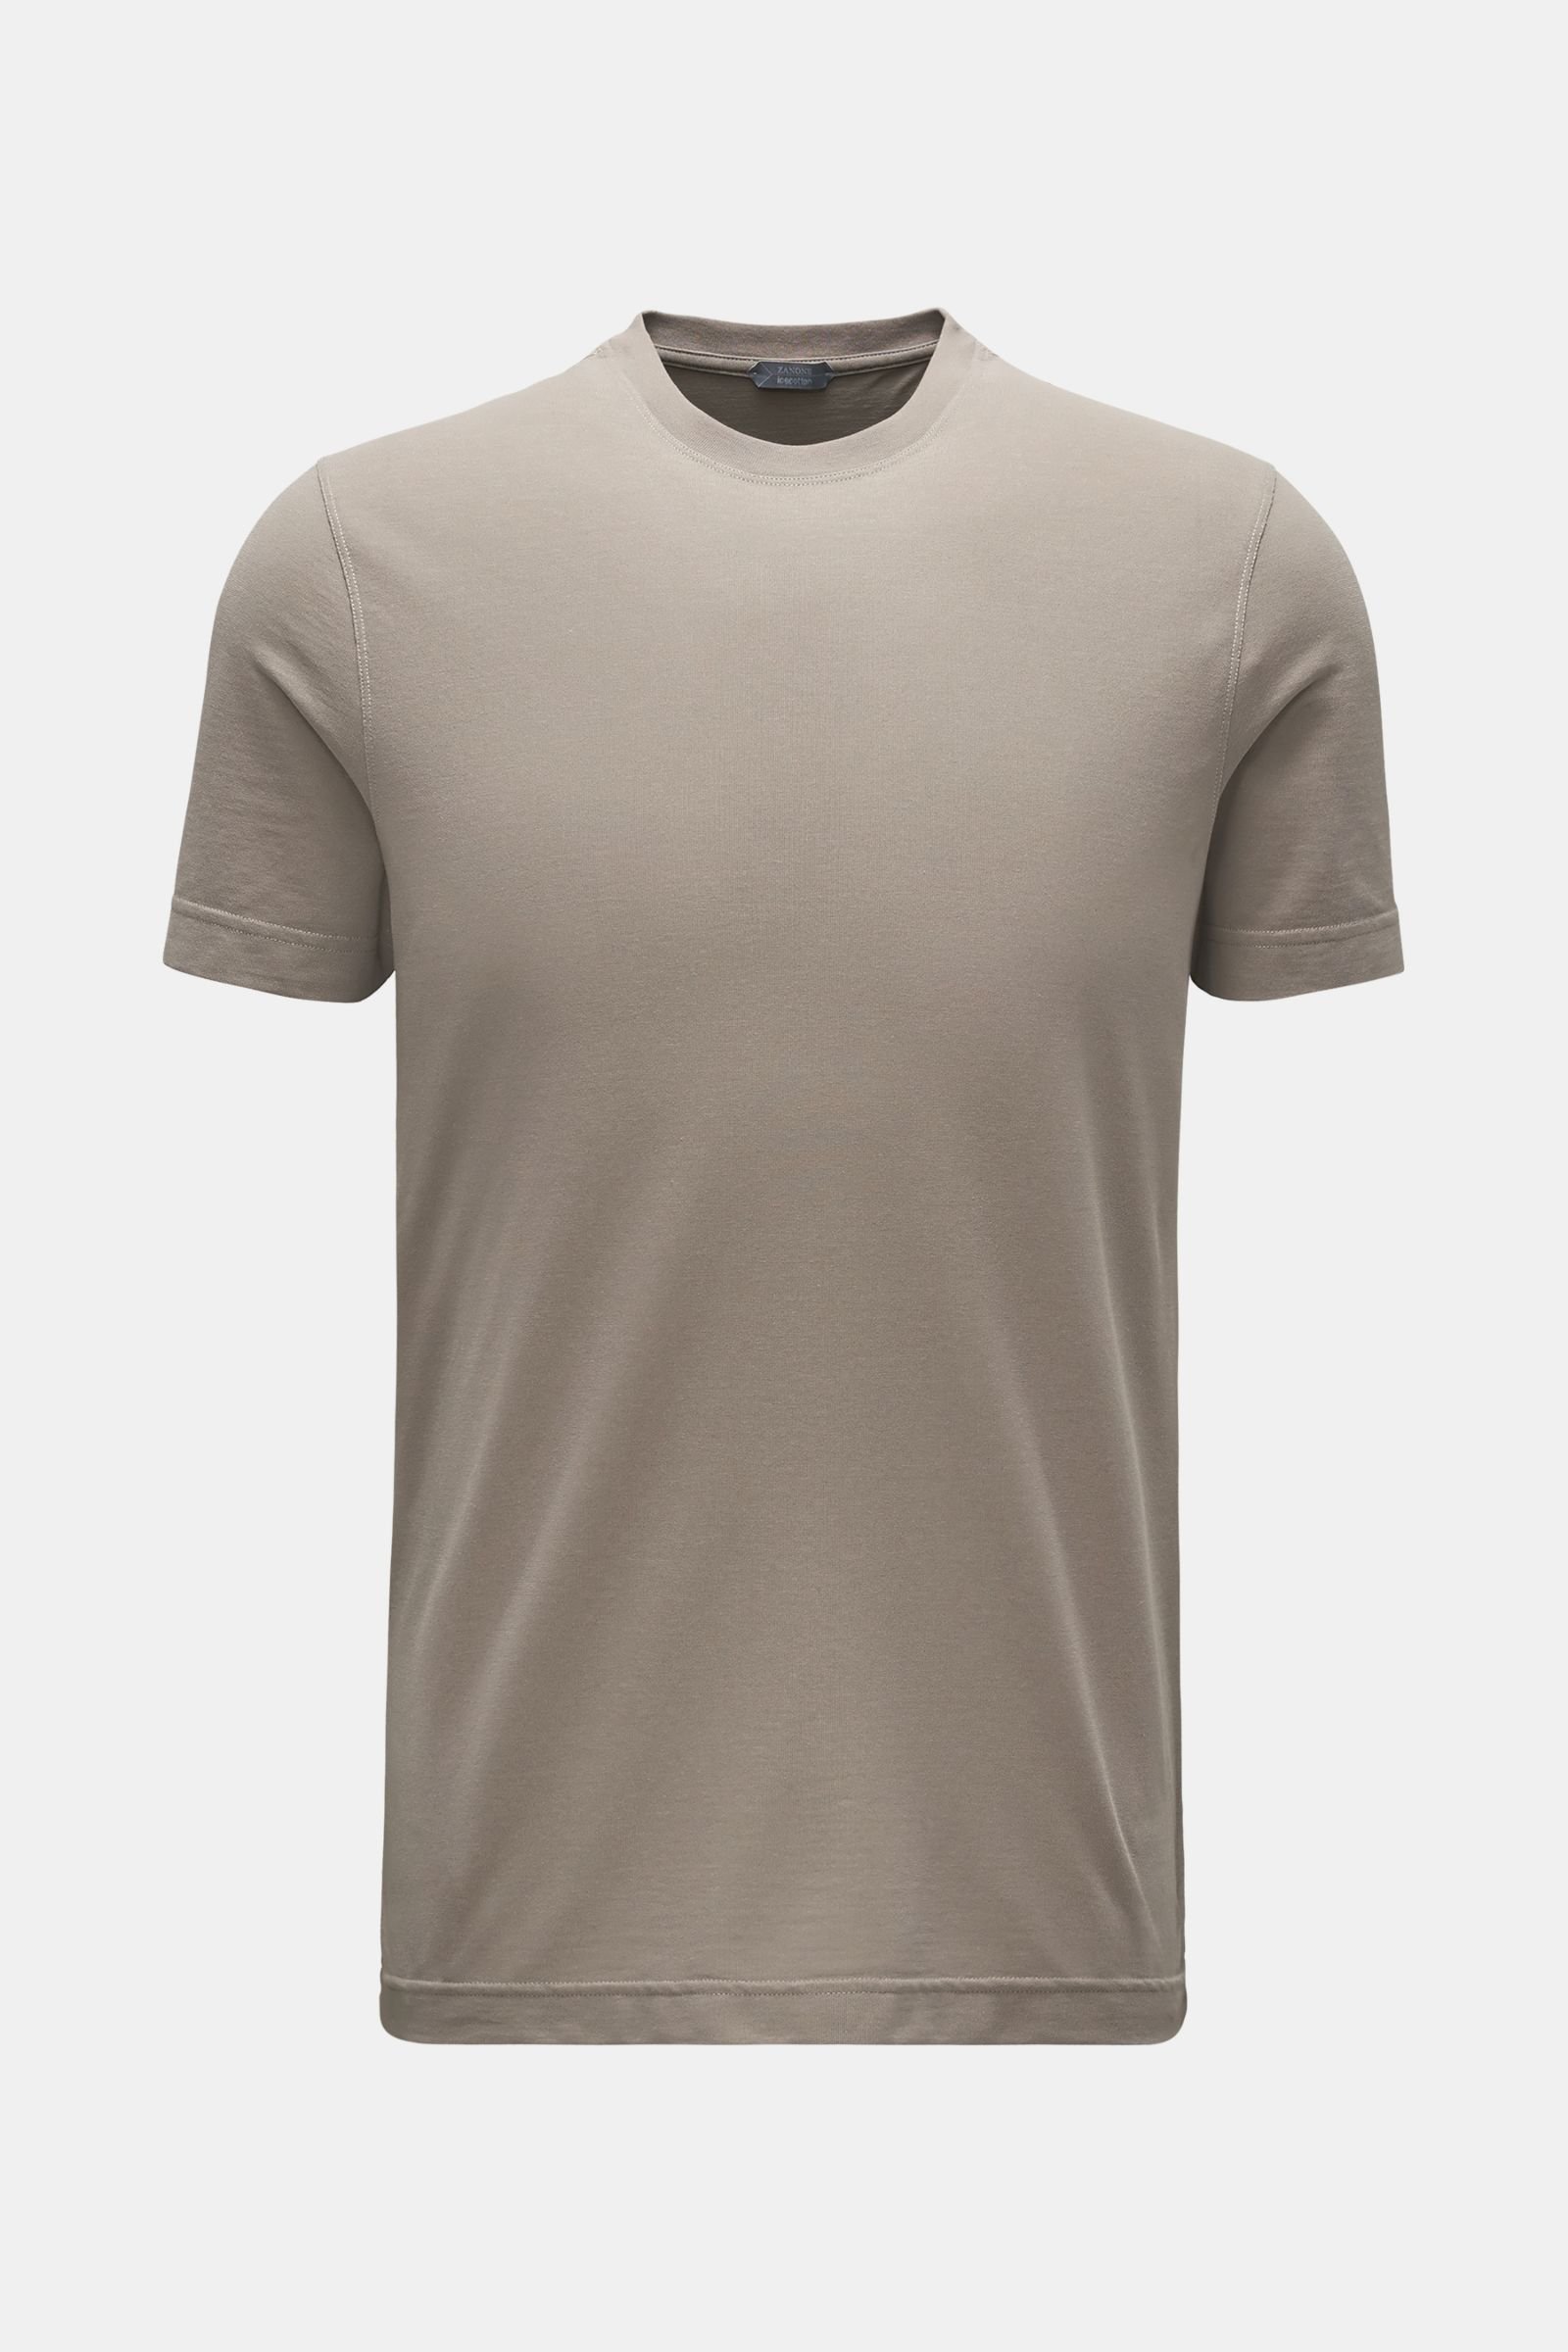 Crew neck T-shirt grey-brown